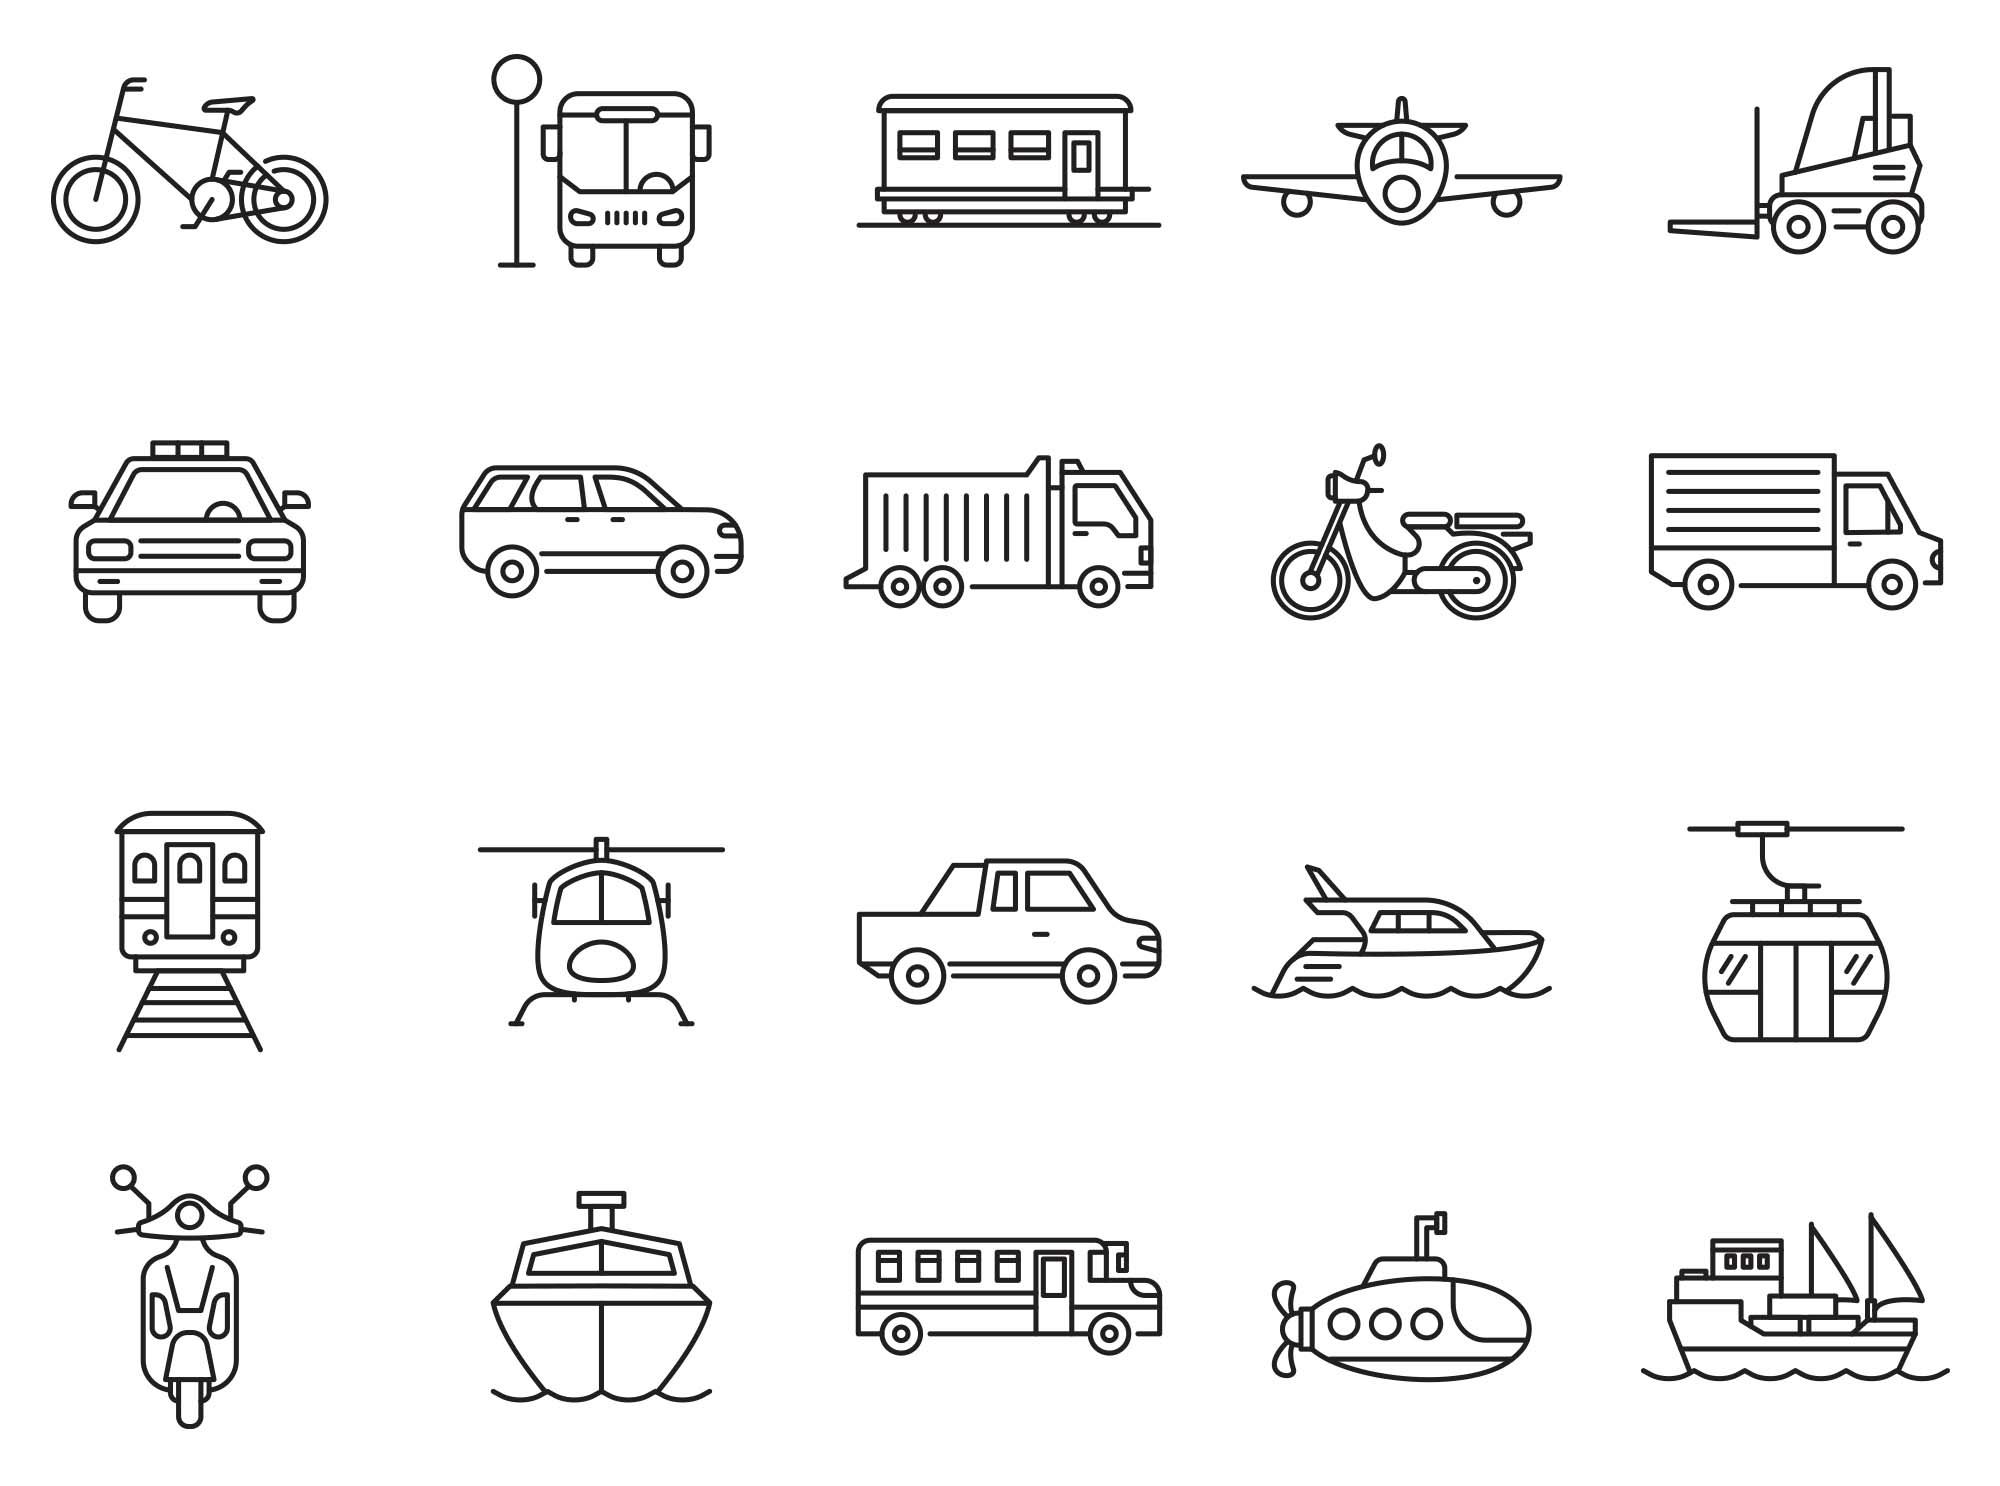 80个交通工具图标 80 Transportation Icons 图标素材 第1张